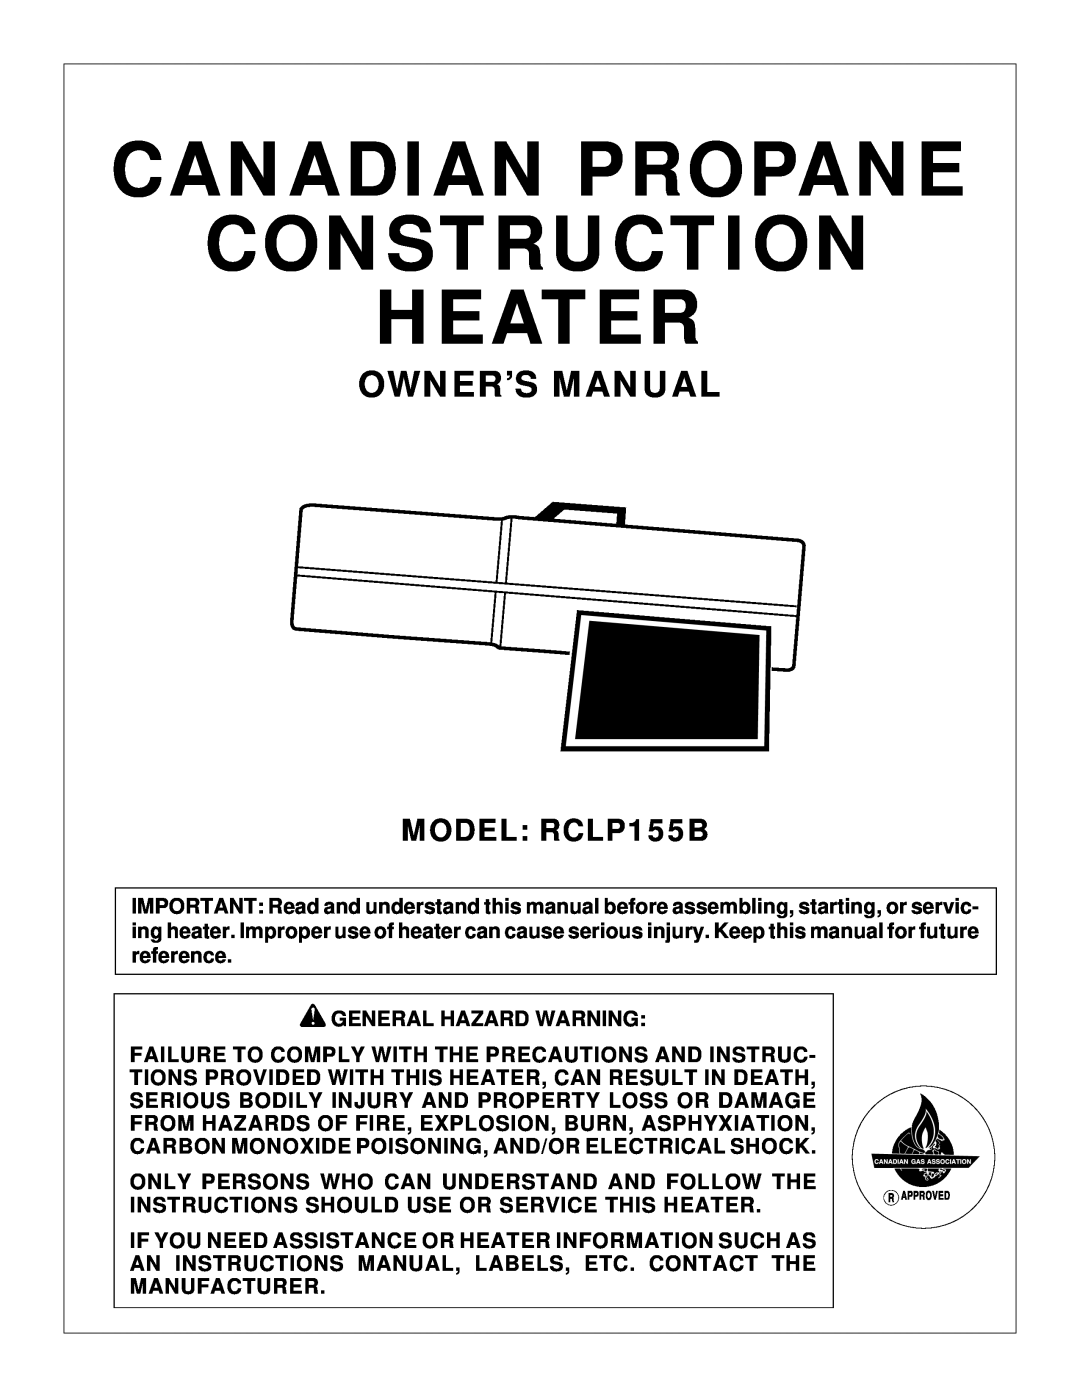 Desa owner manual Owner’S Manual, General Hazard Warning, Canadian Propane Construction Heater, MODEL RCLP155B 